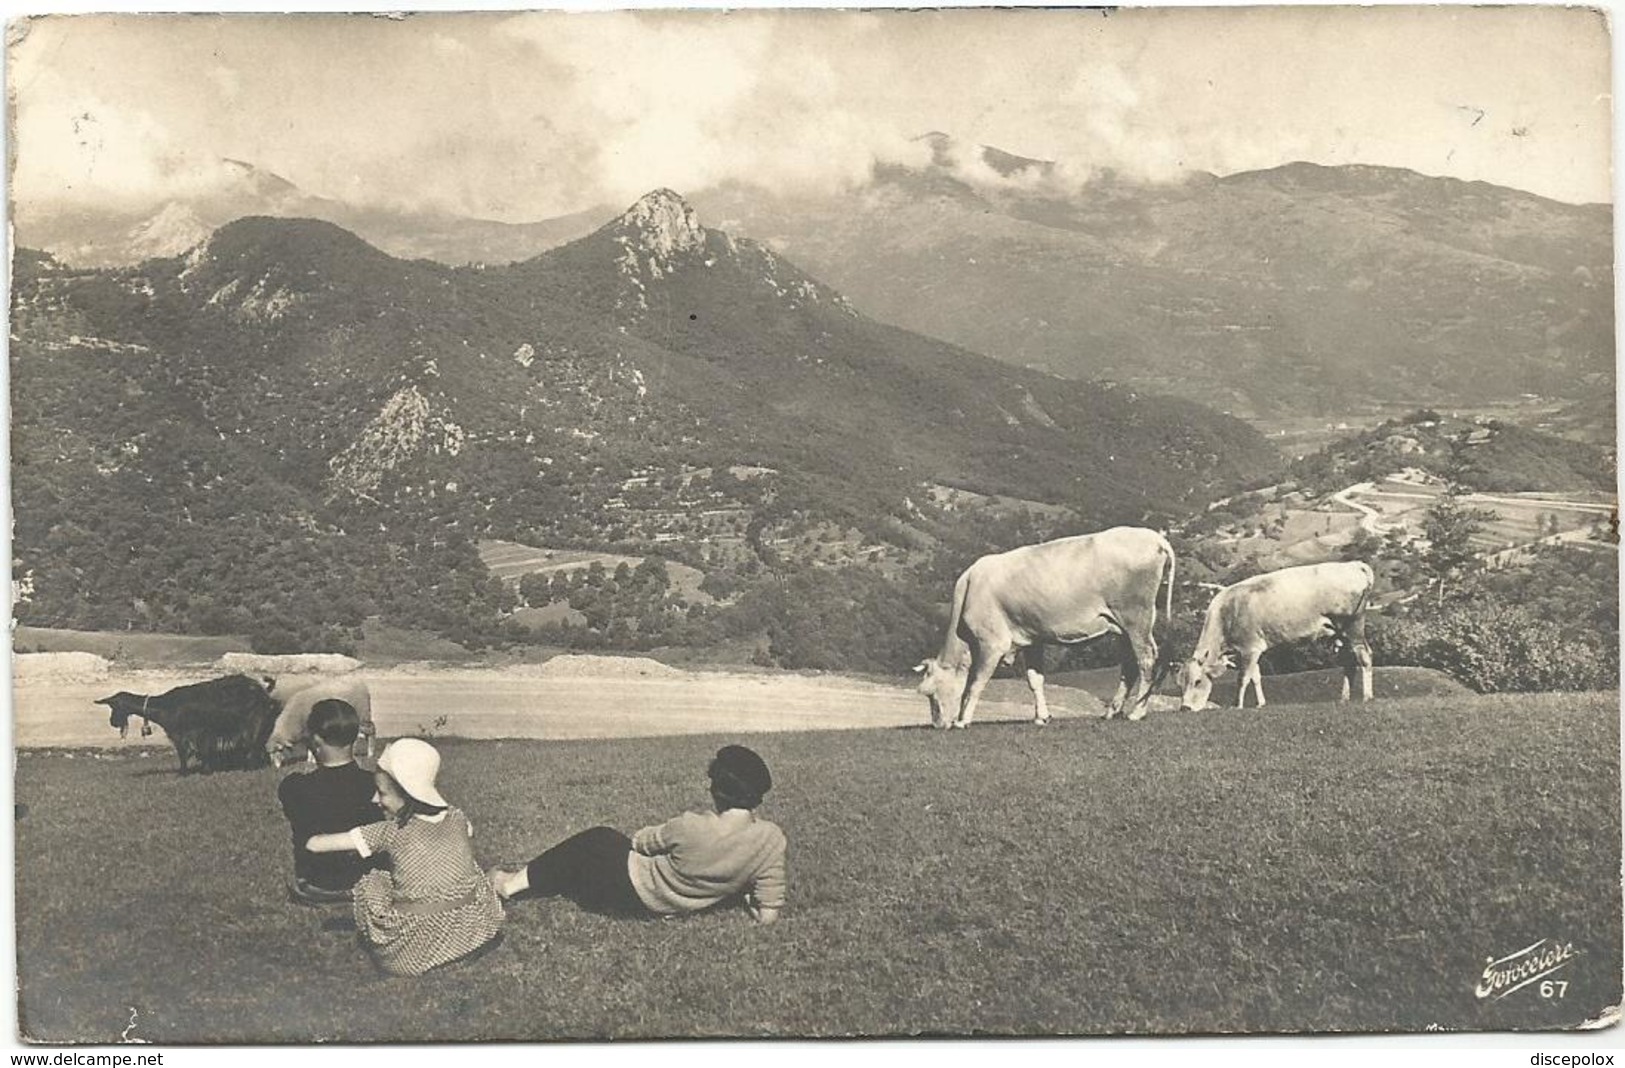 W4246 Paesaggio Paysage Landscape - Vacca, Mucca, Cow, Koe, Vache, Vaca / Viaggiata 1943 - Cows